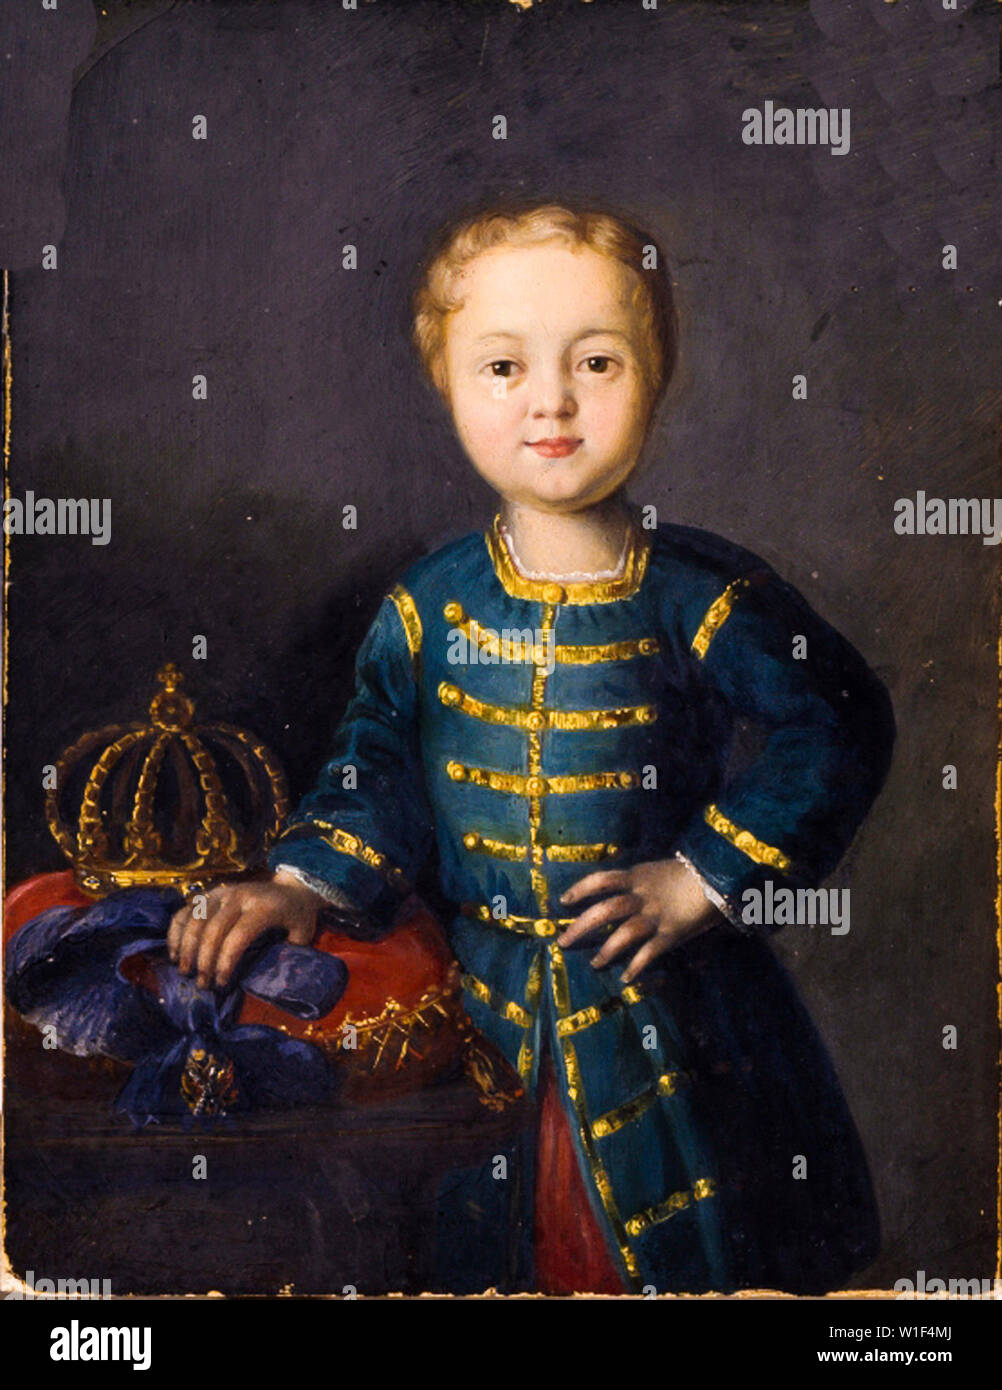 Ivan VI, Emperor of Russia, 1740-1764, portrait painting, 1744-1750 Stock Photo